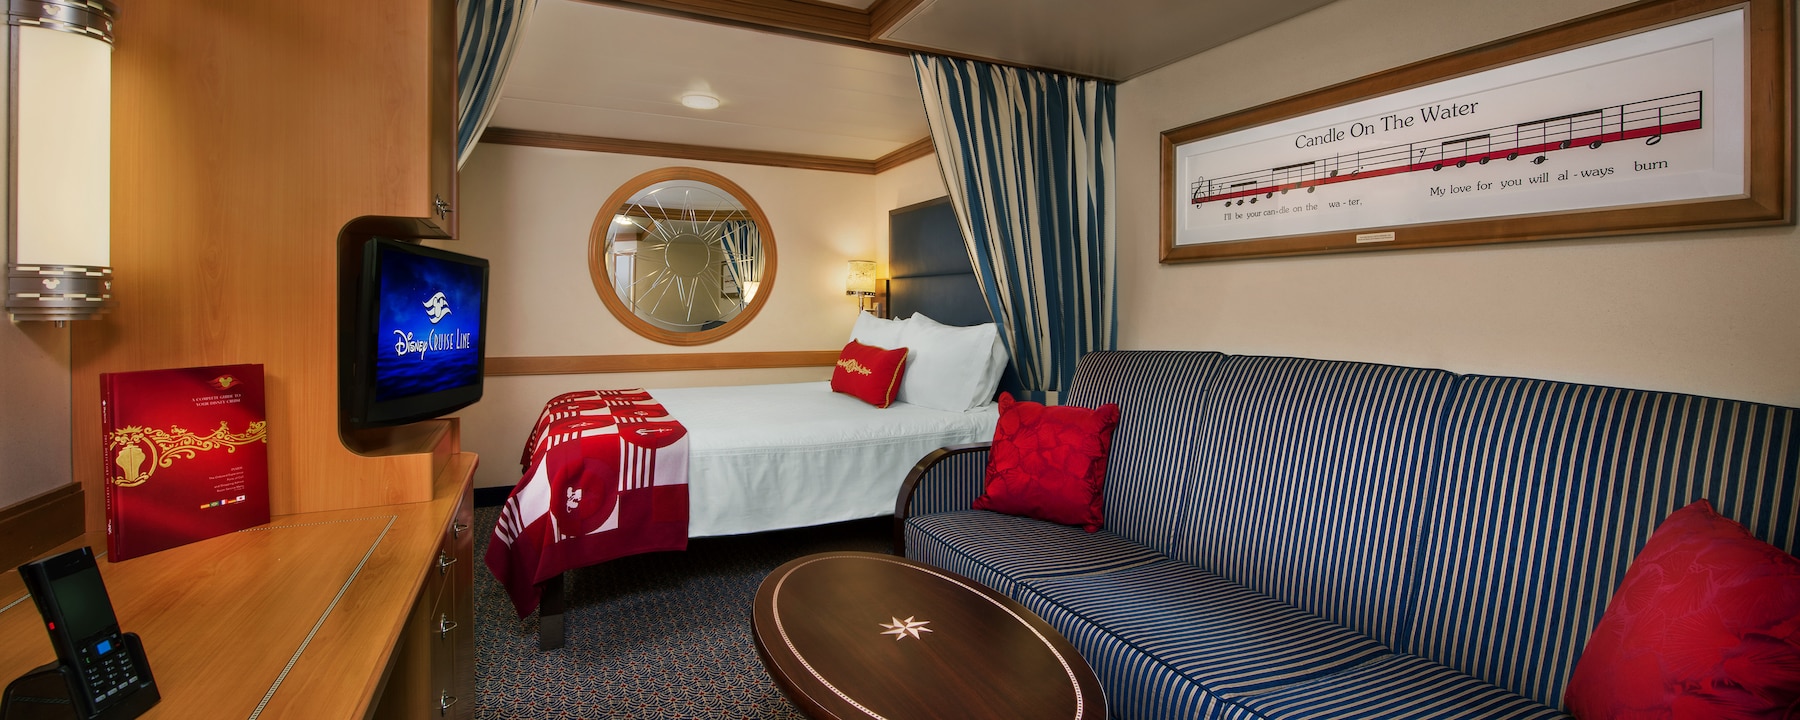 disney cruise staff cabin